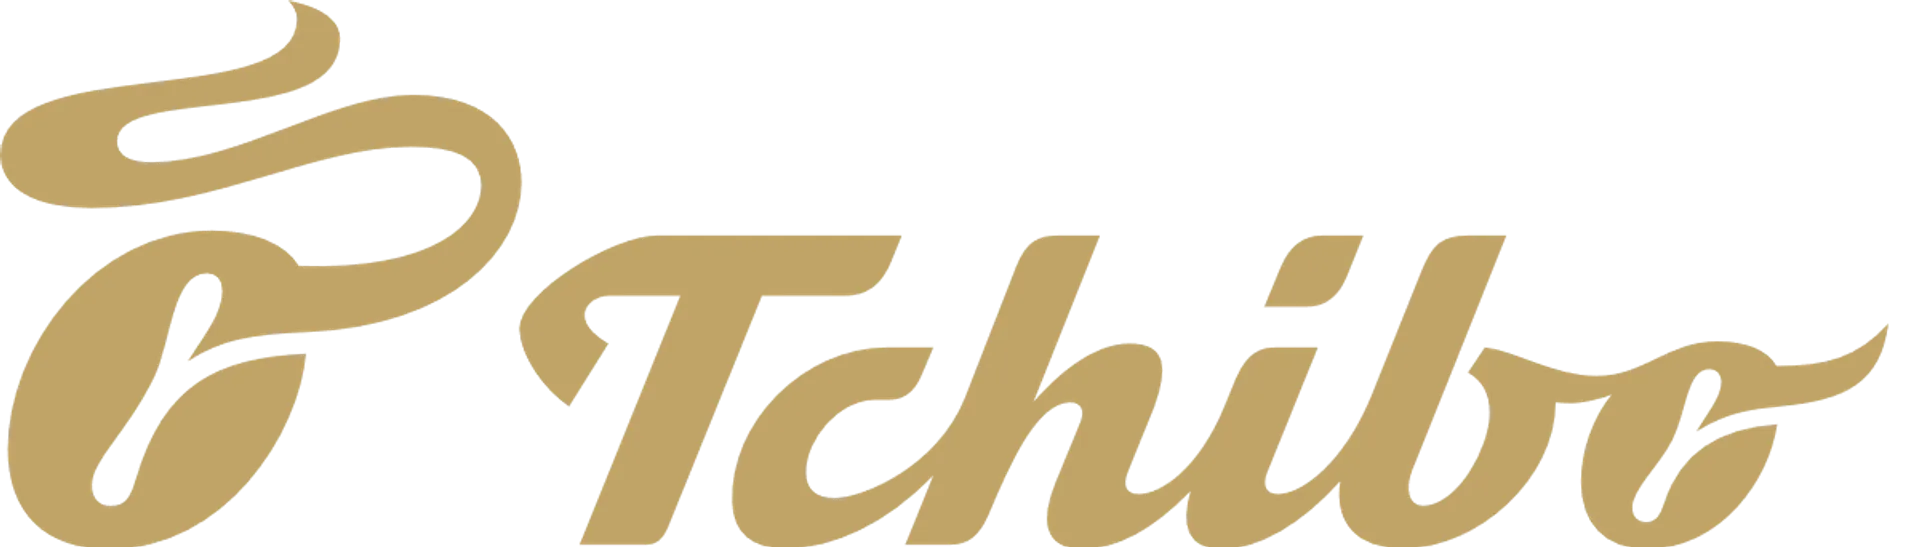 TCHIBO logo